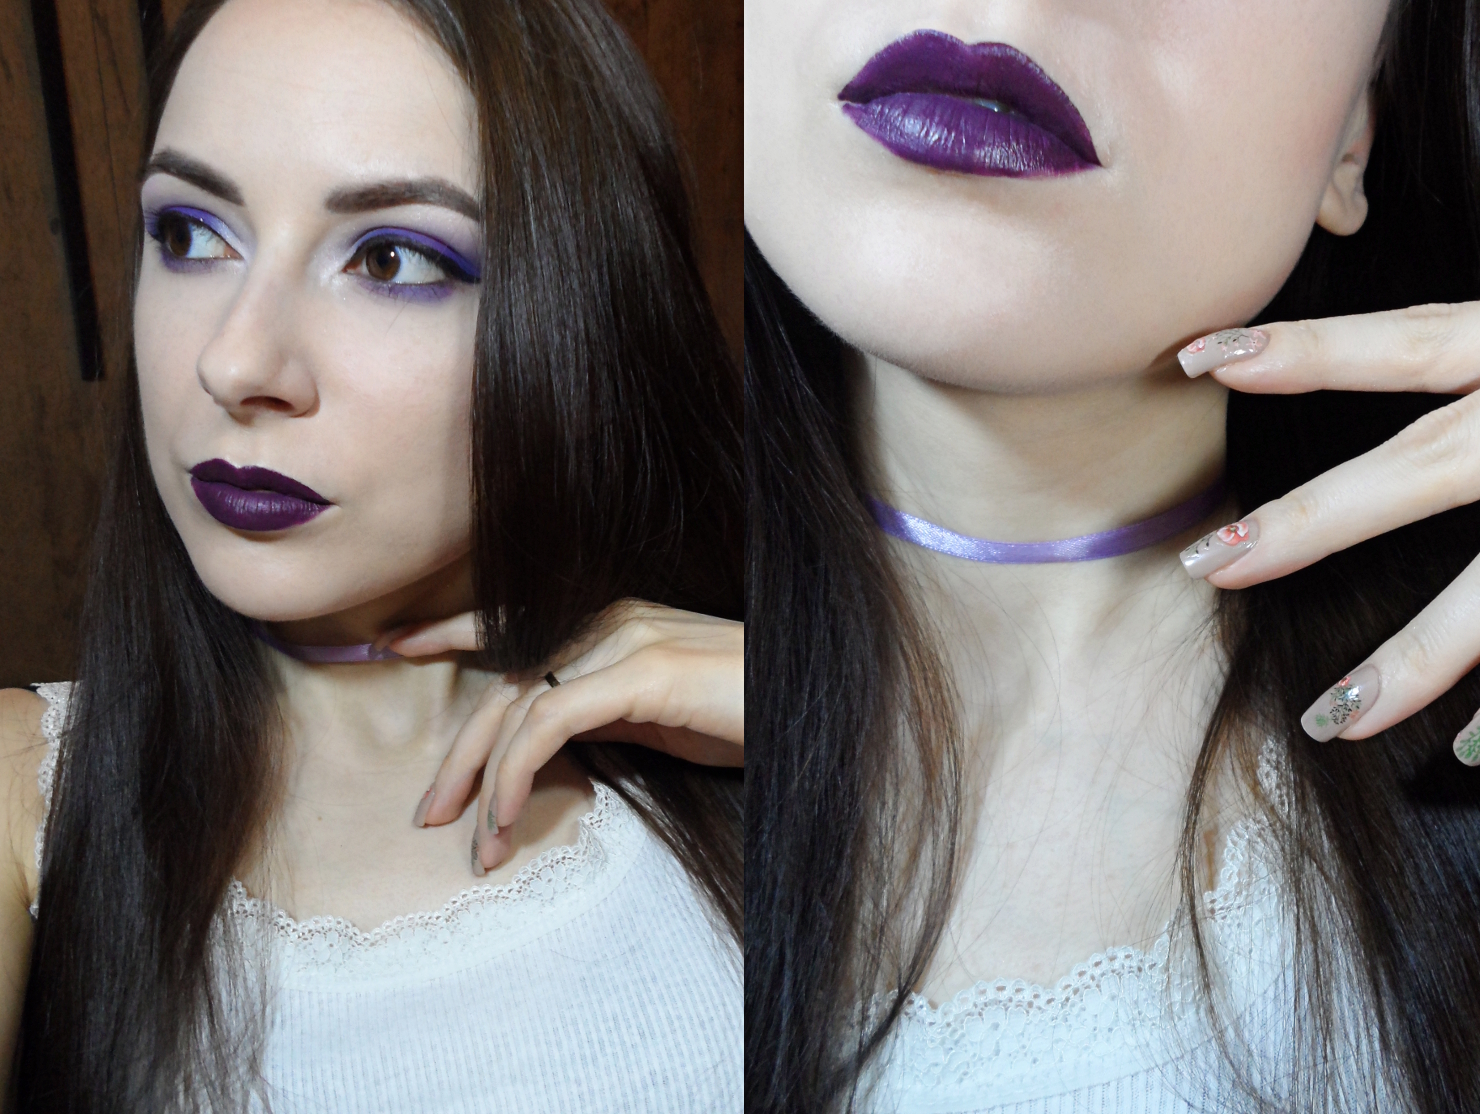 Liz Breygel shows a stunning, deep violet makeup look